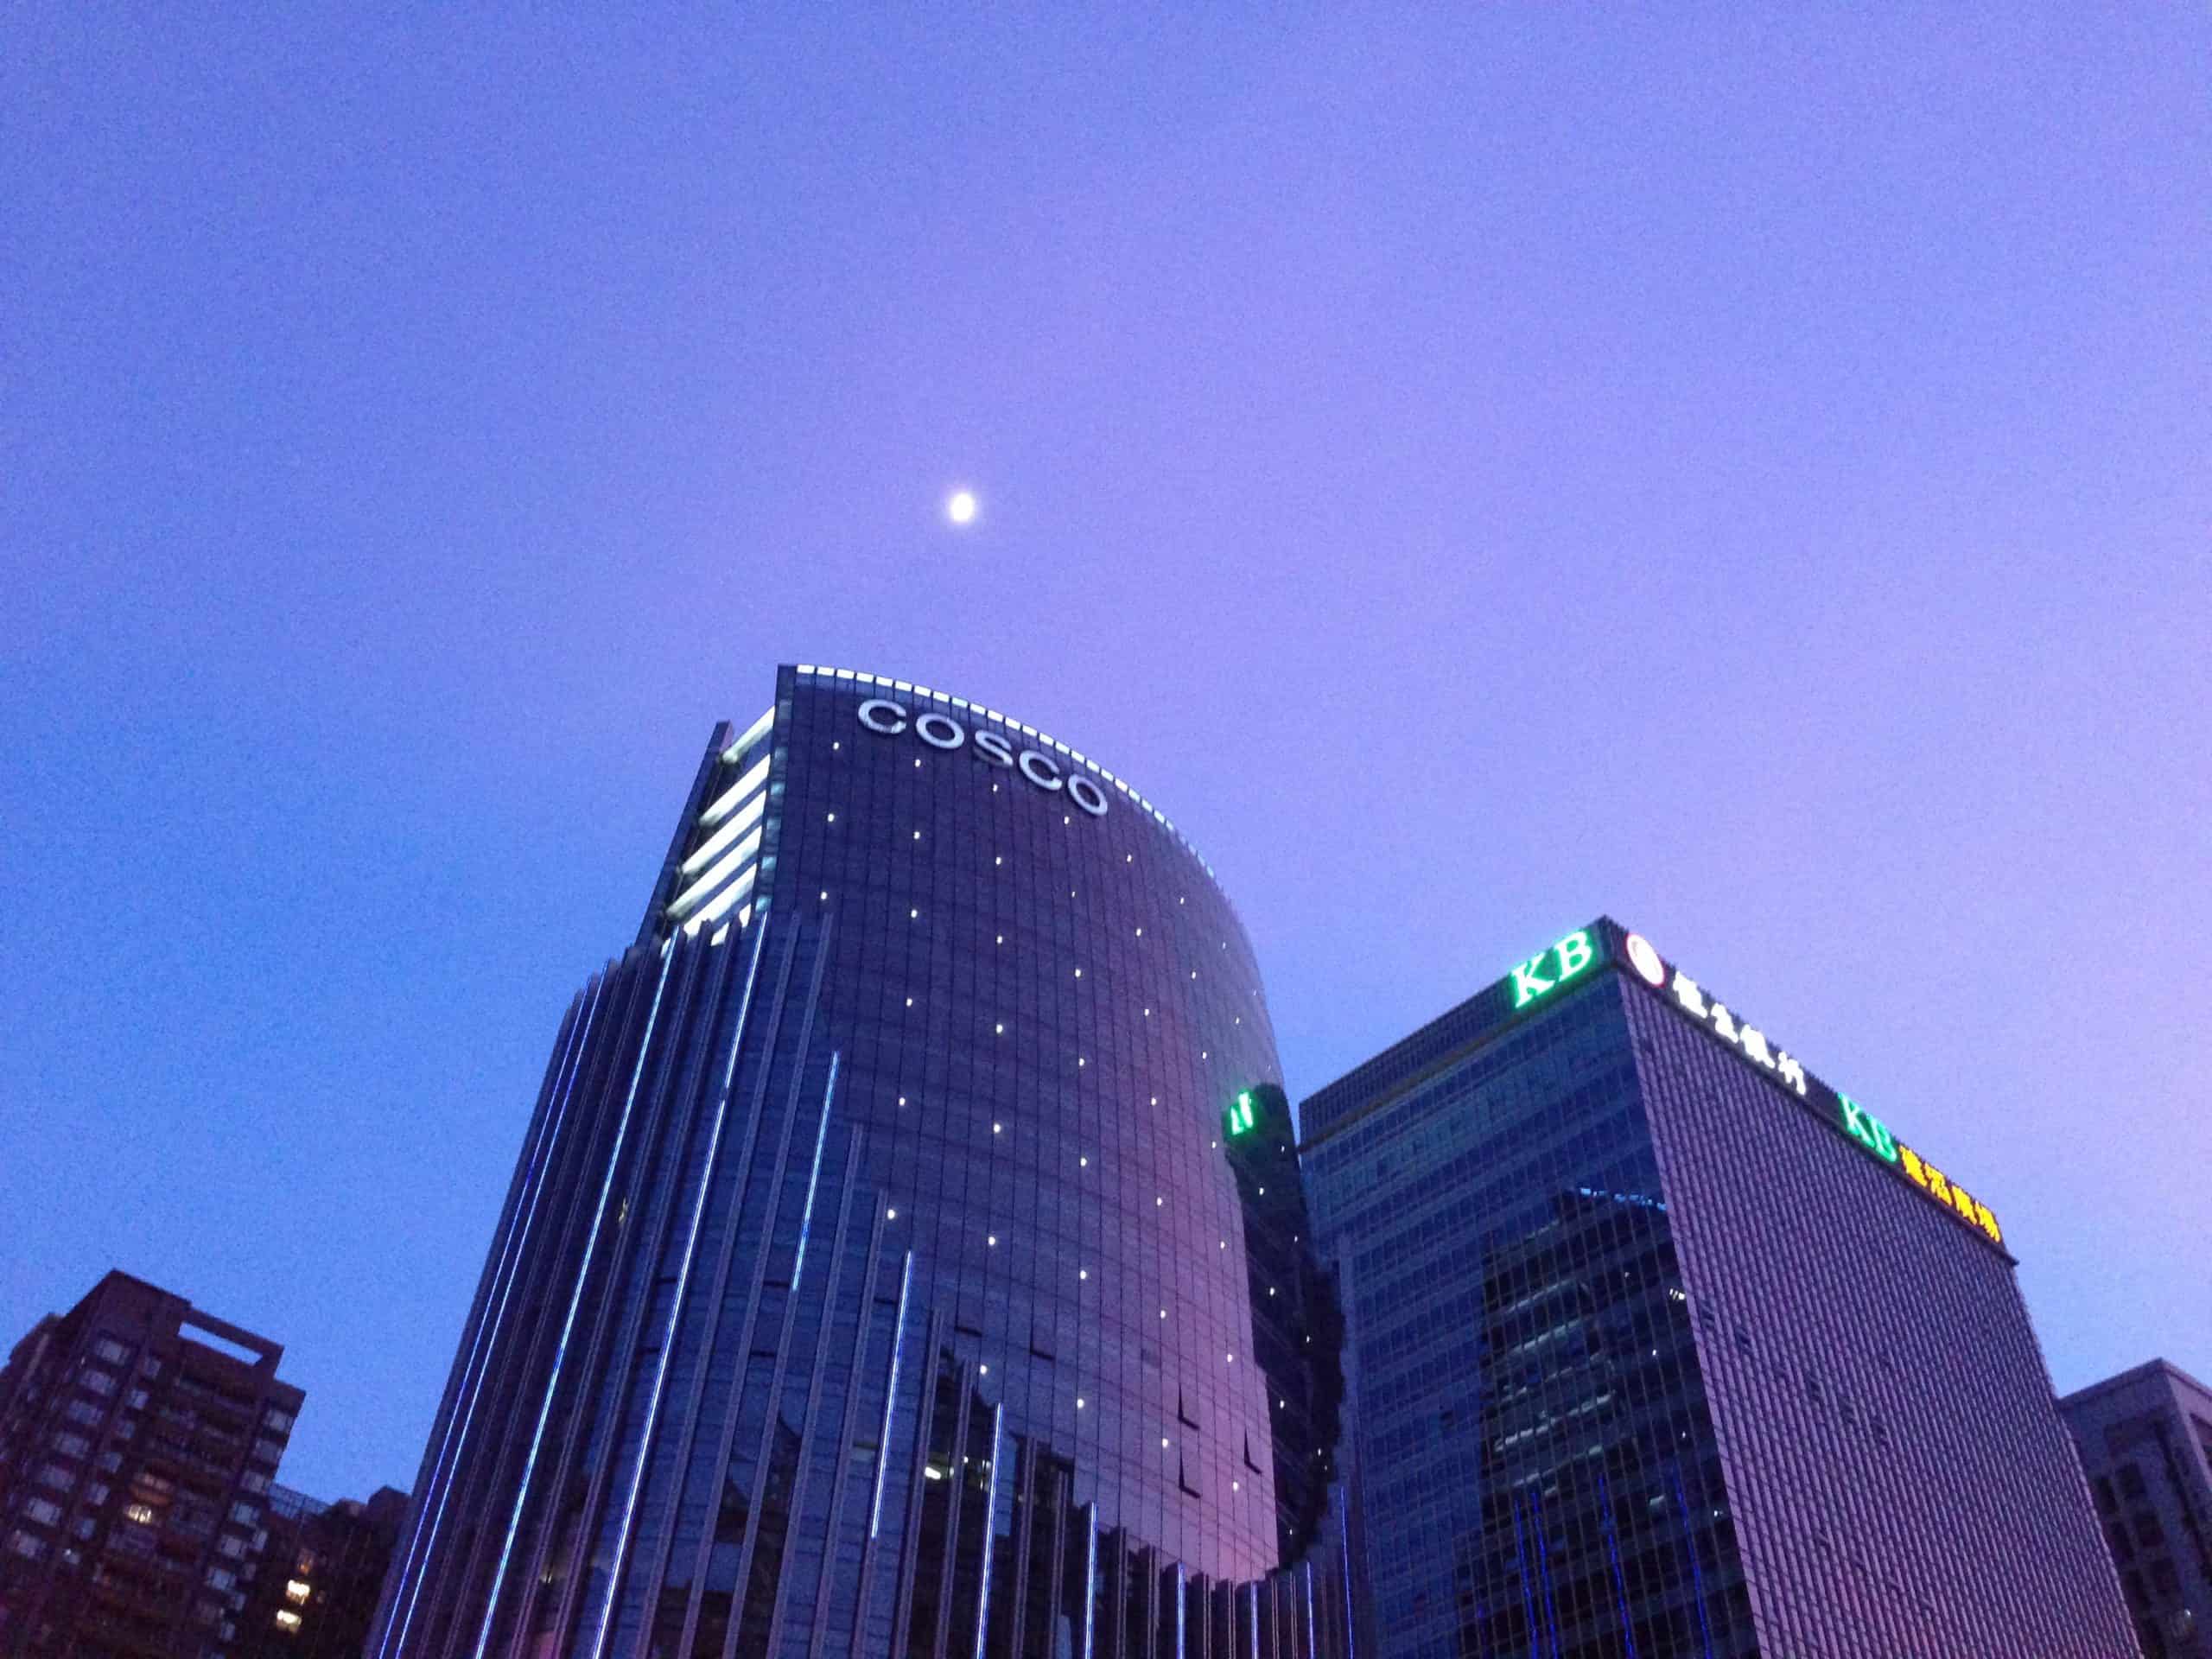 The moon shining brightly over the skyscrapers in Zhujiang New Town, Guangzhou, China.